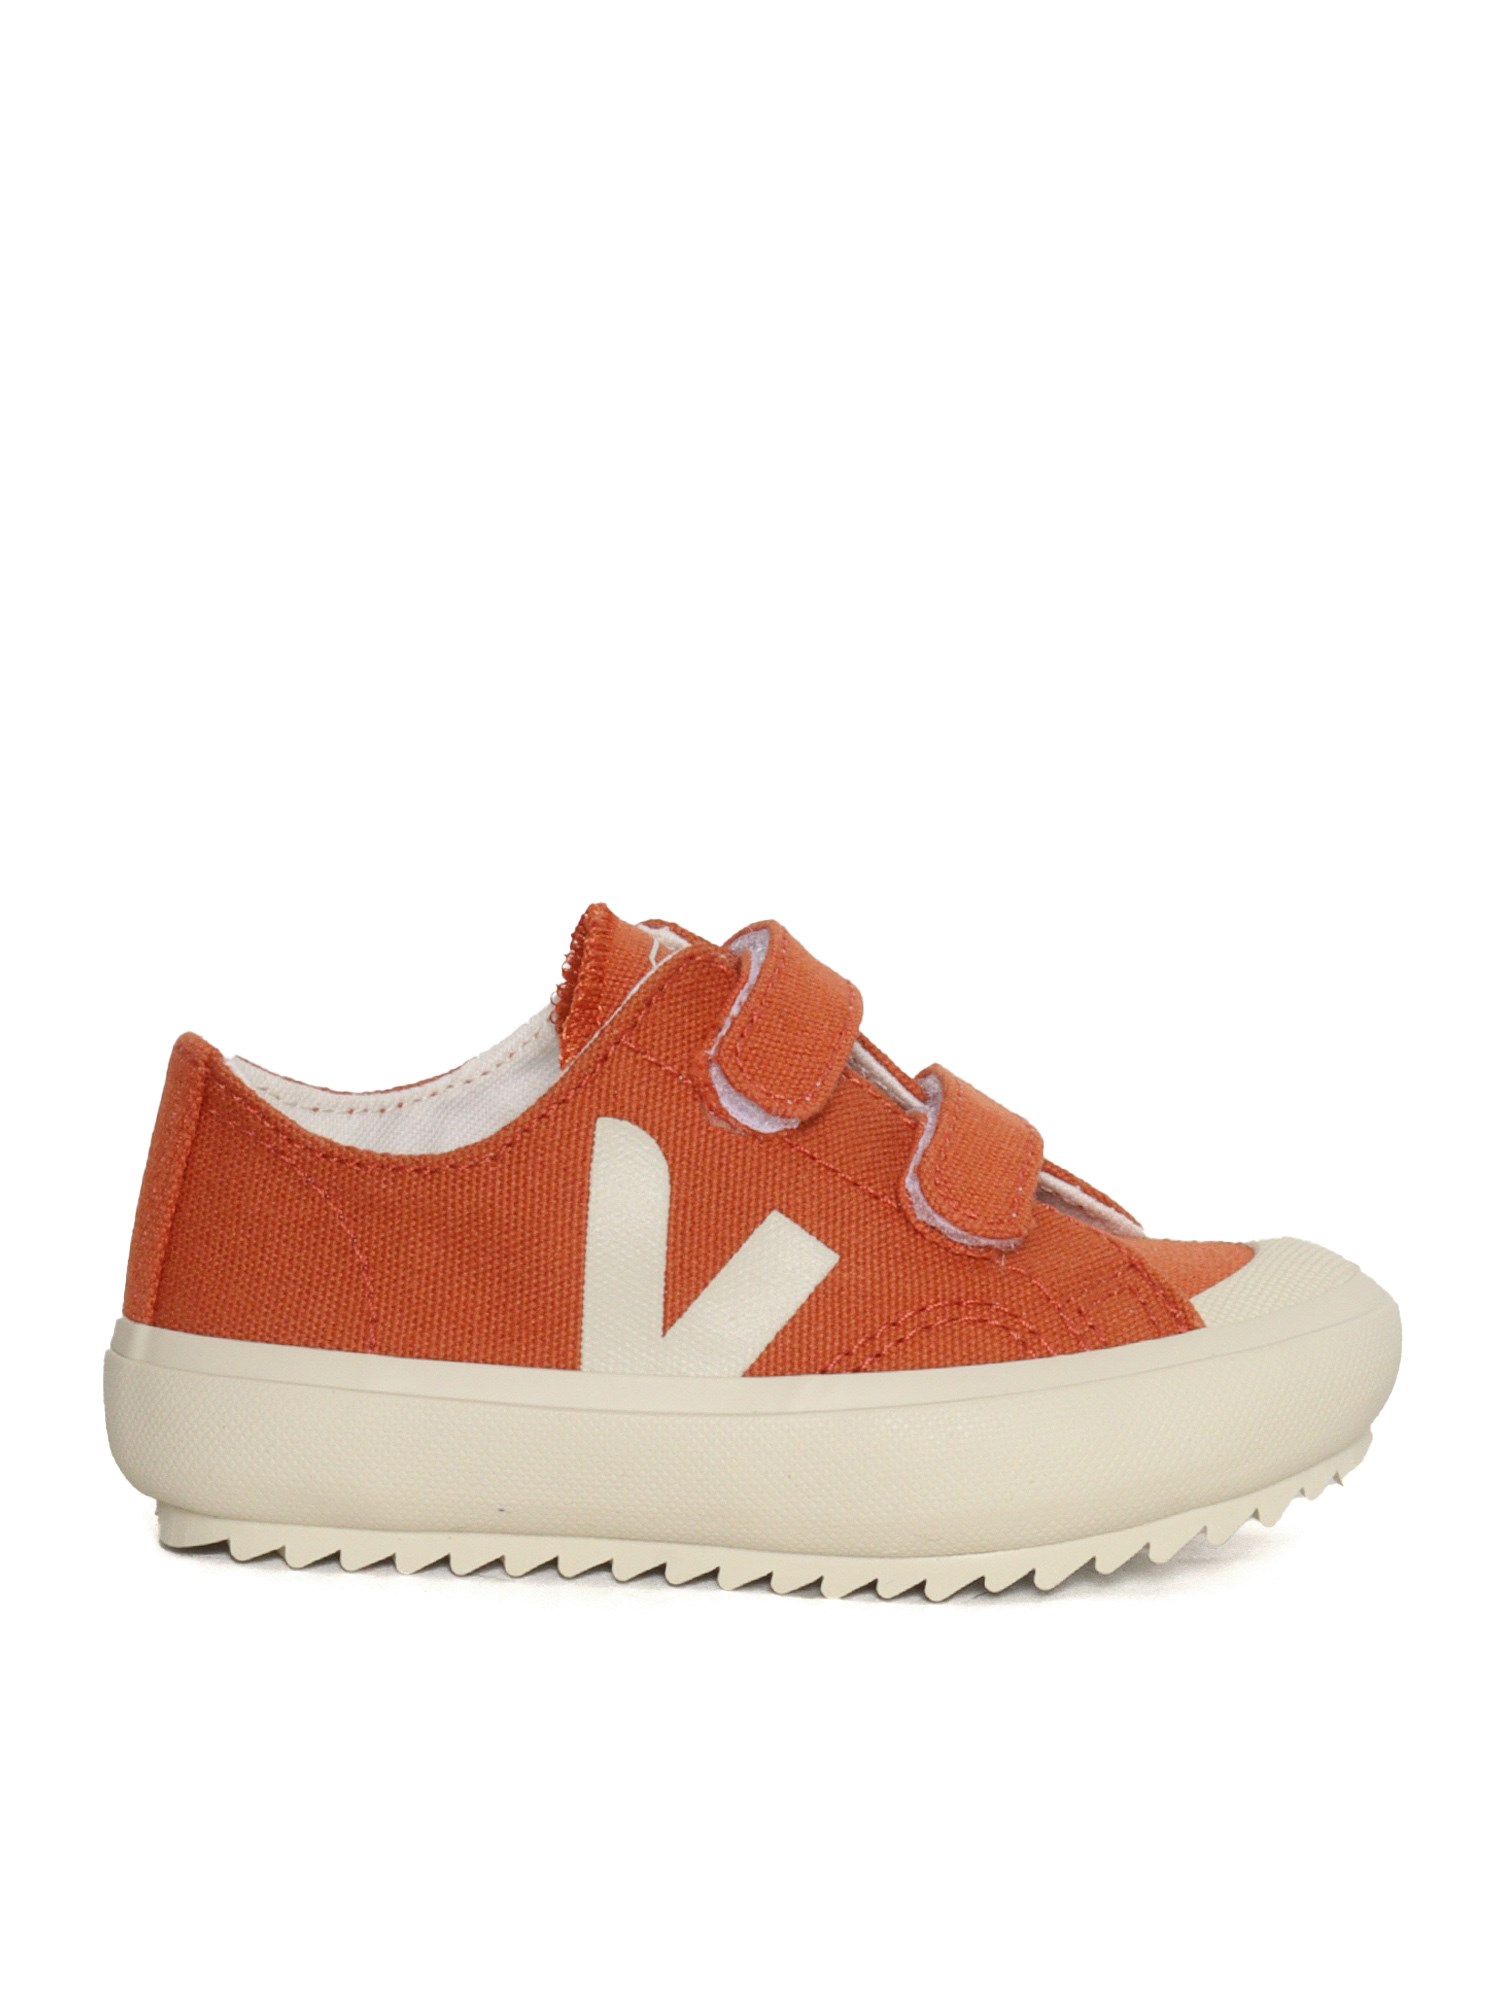 Veja Ollie Sneakers In Orange